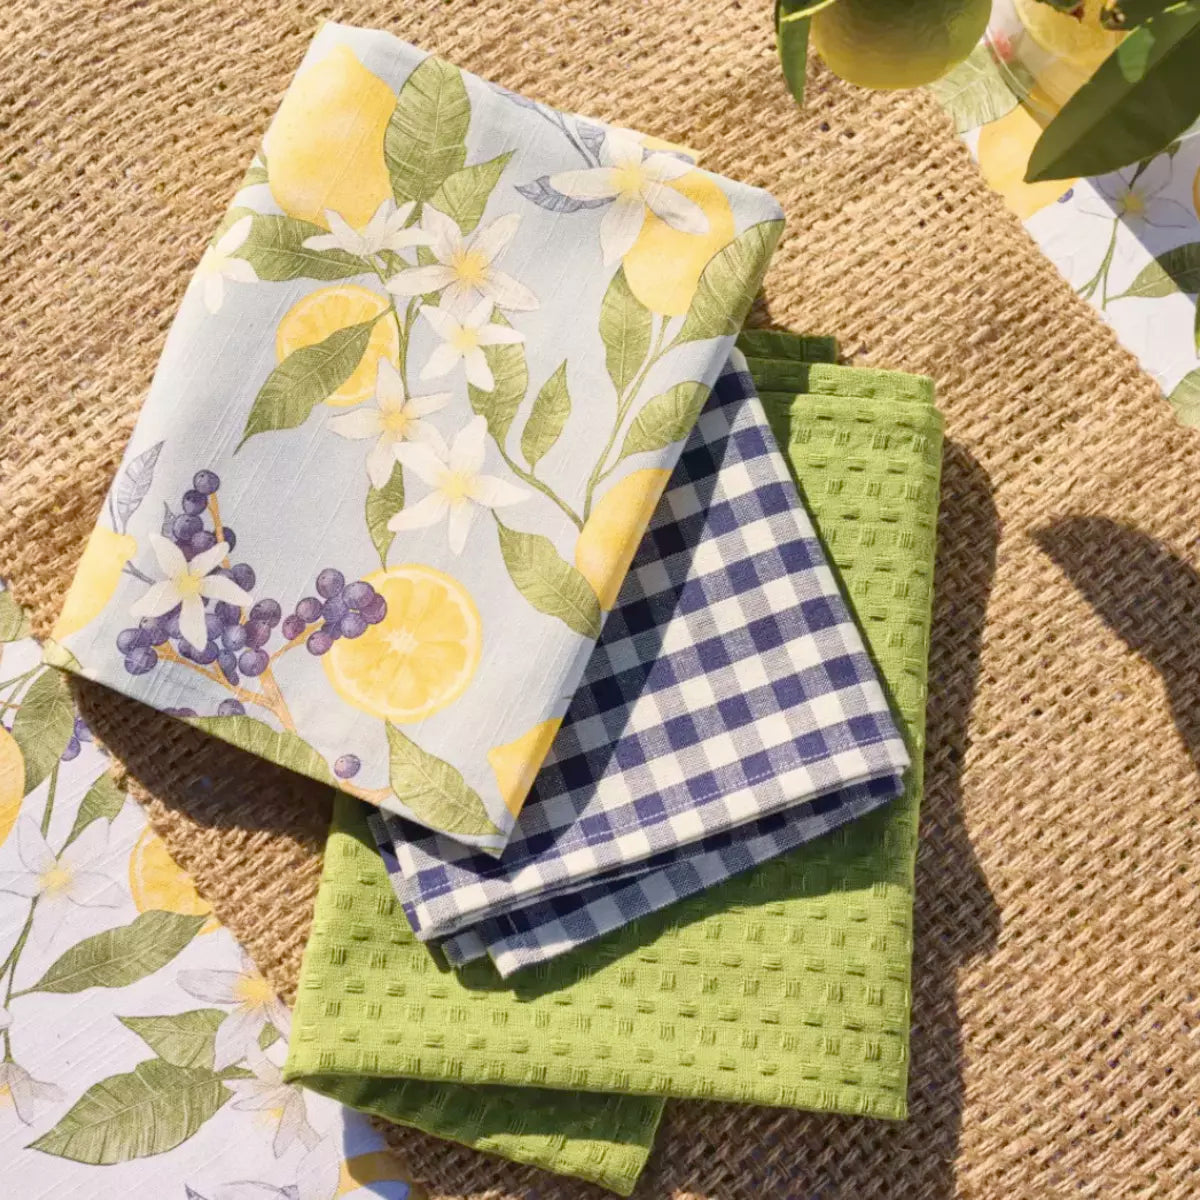 Lemon Tea Towel - 3 Pack made of cotton fabric by j.elliot.